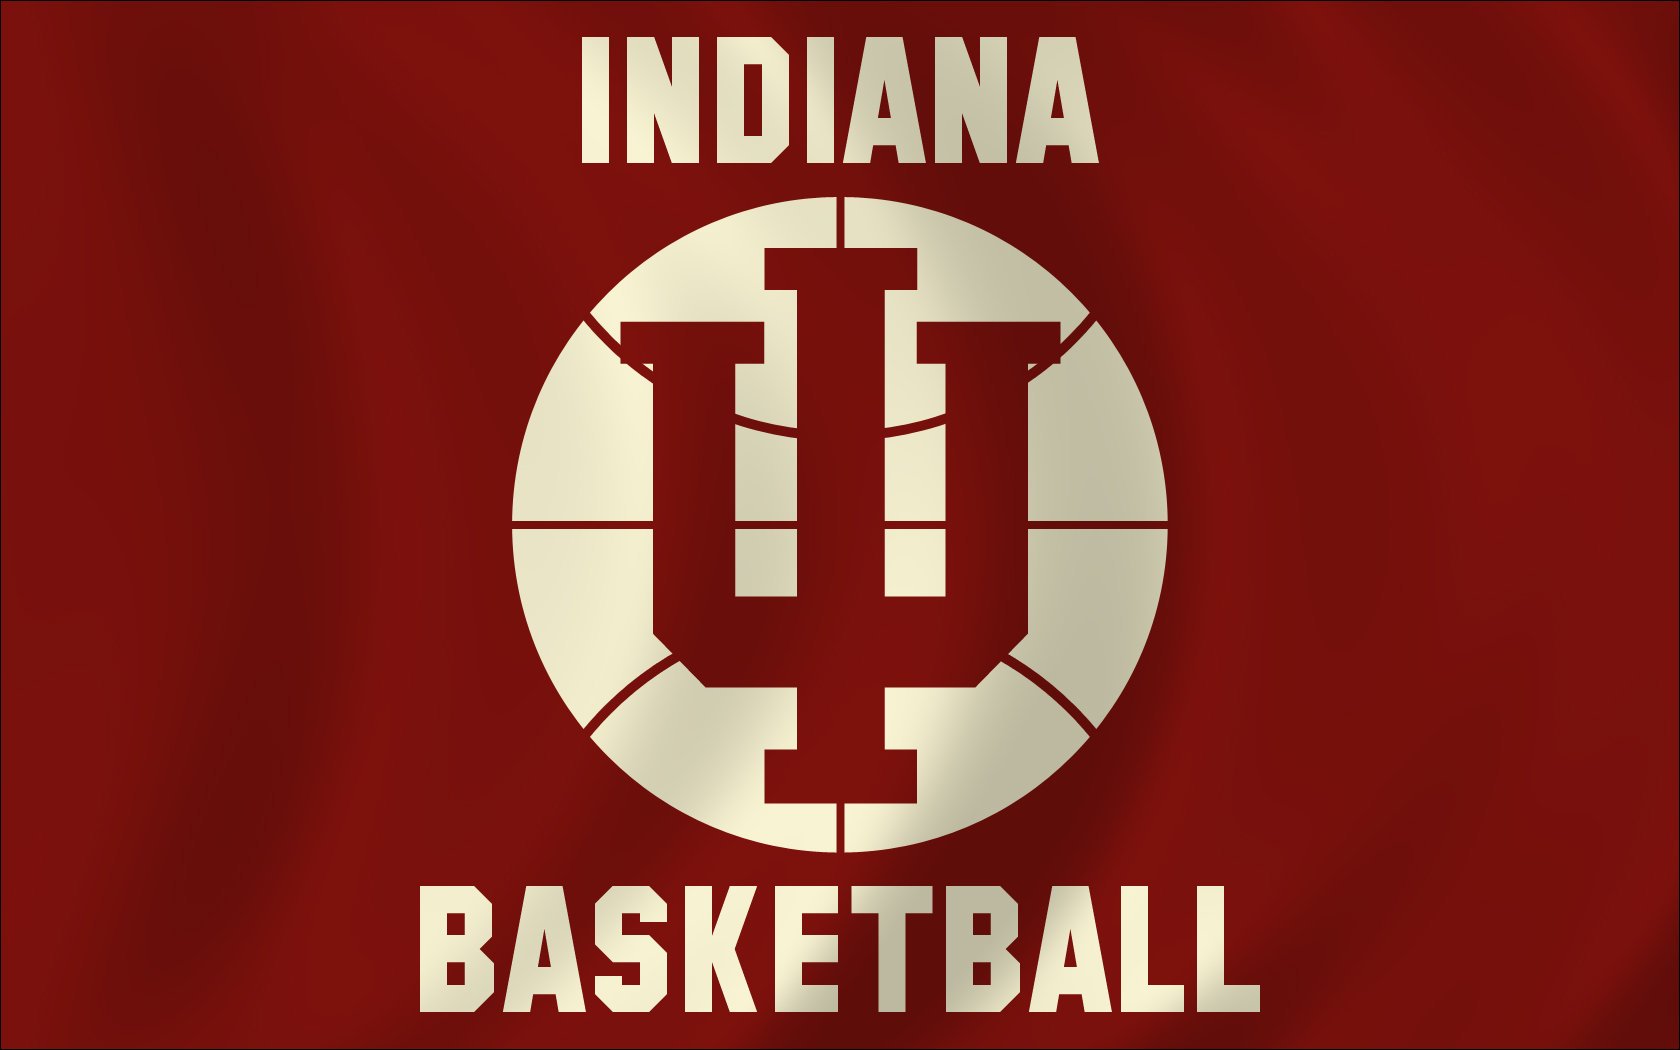 Indiana Basketball Flag by monkeybiziu 1680x1050